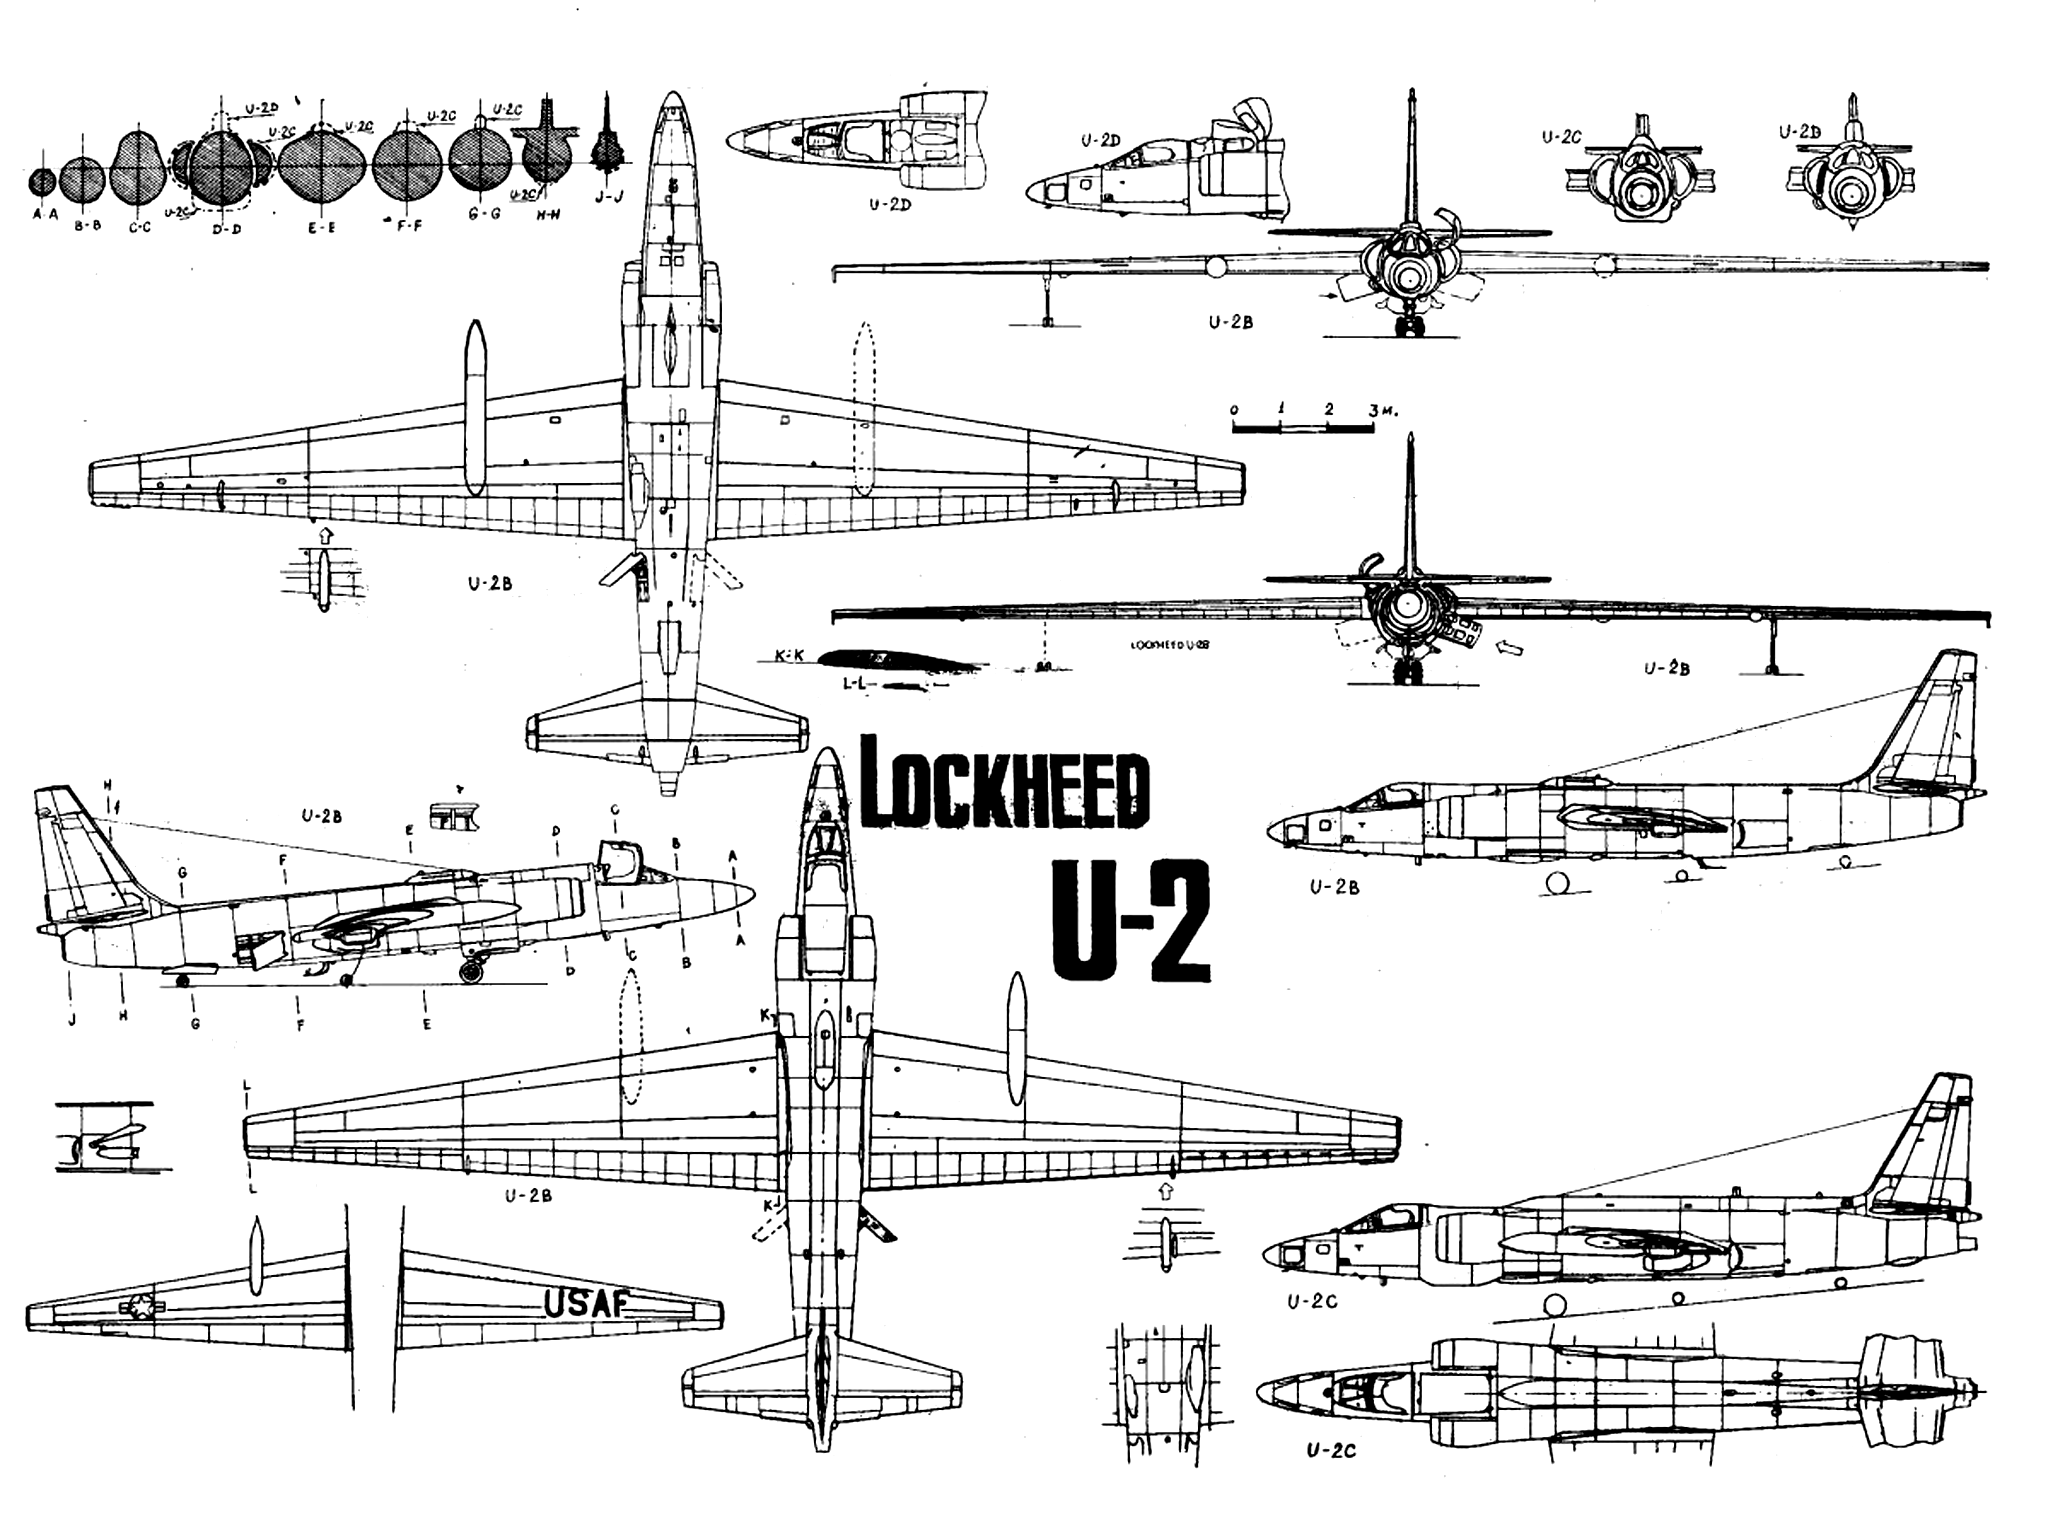 U-2, Facts, Plane, History, & Incident